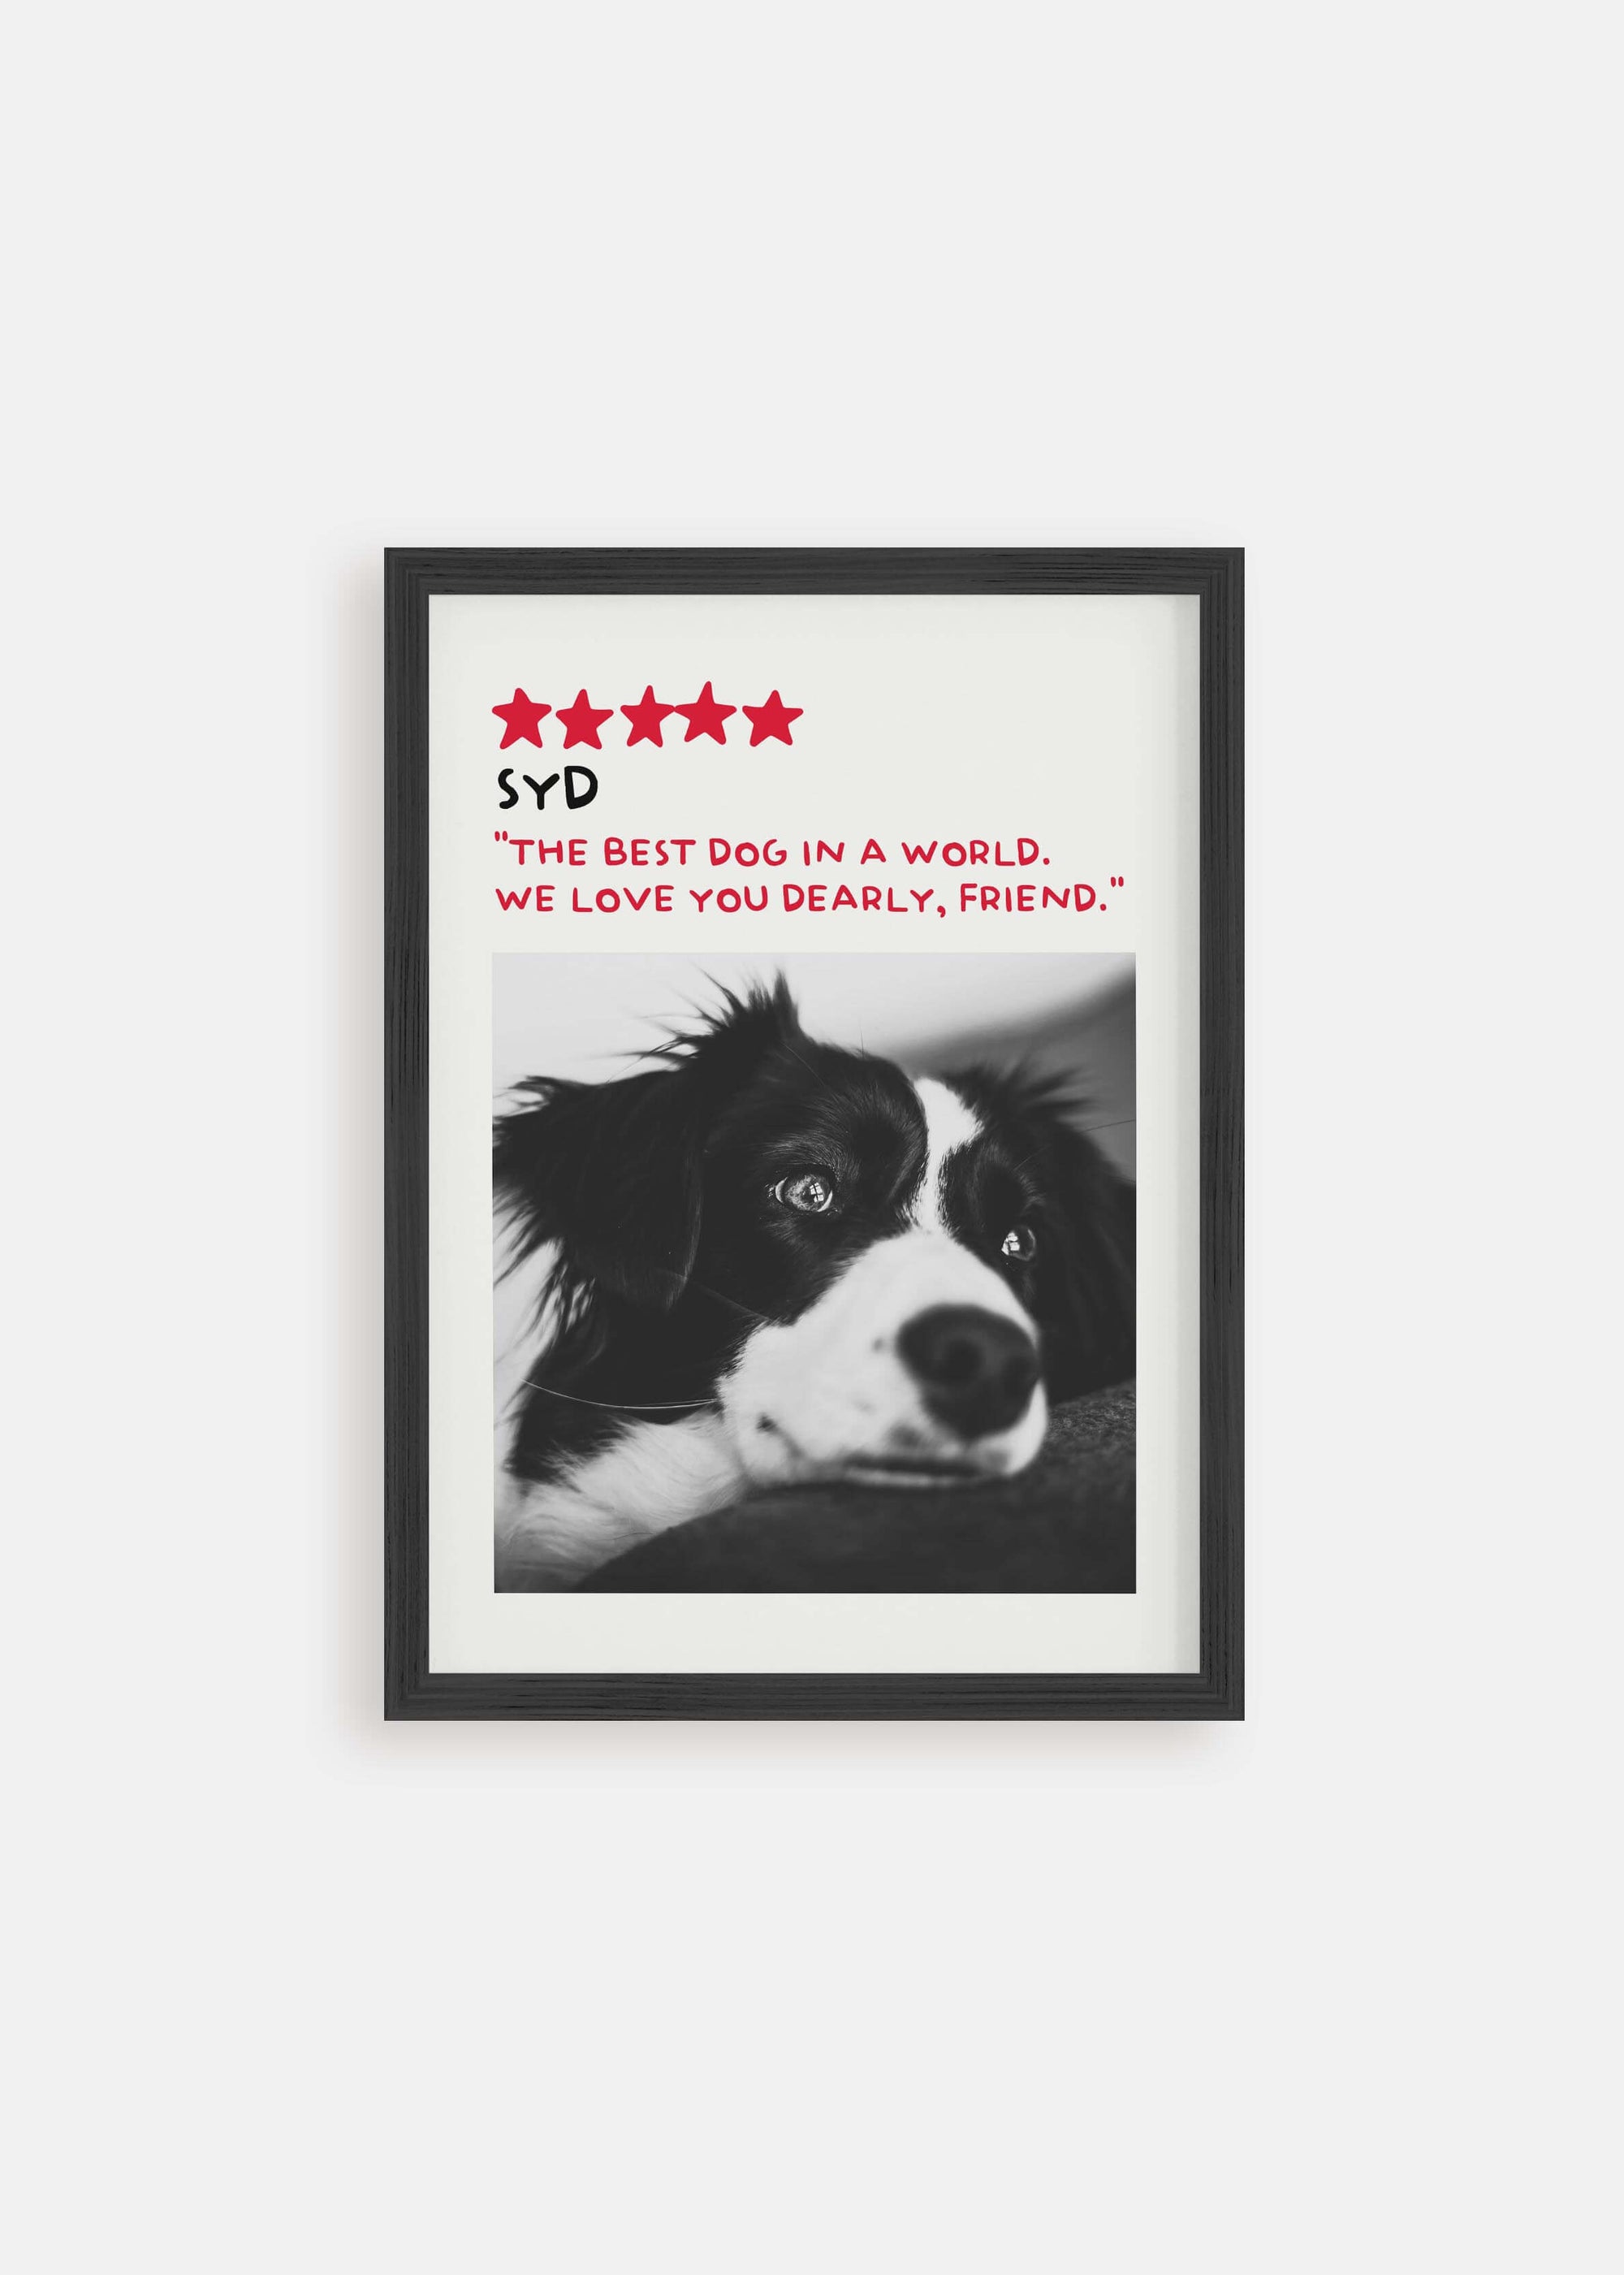 Dog memorial pet art poster in black frame.